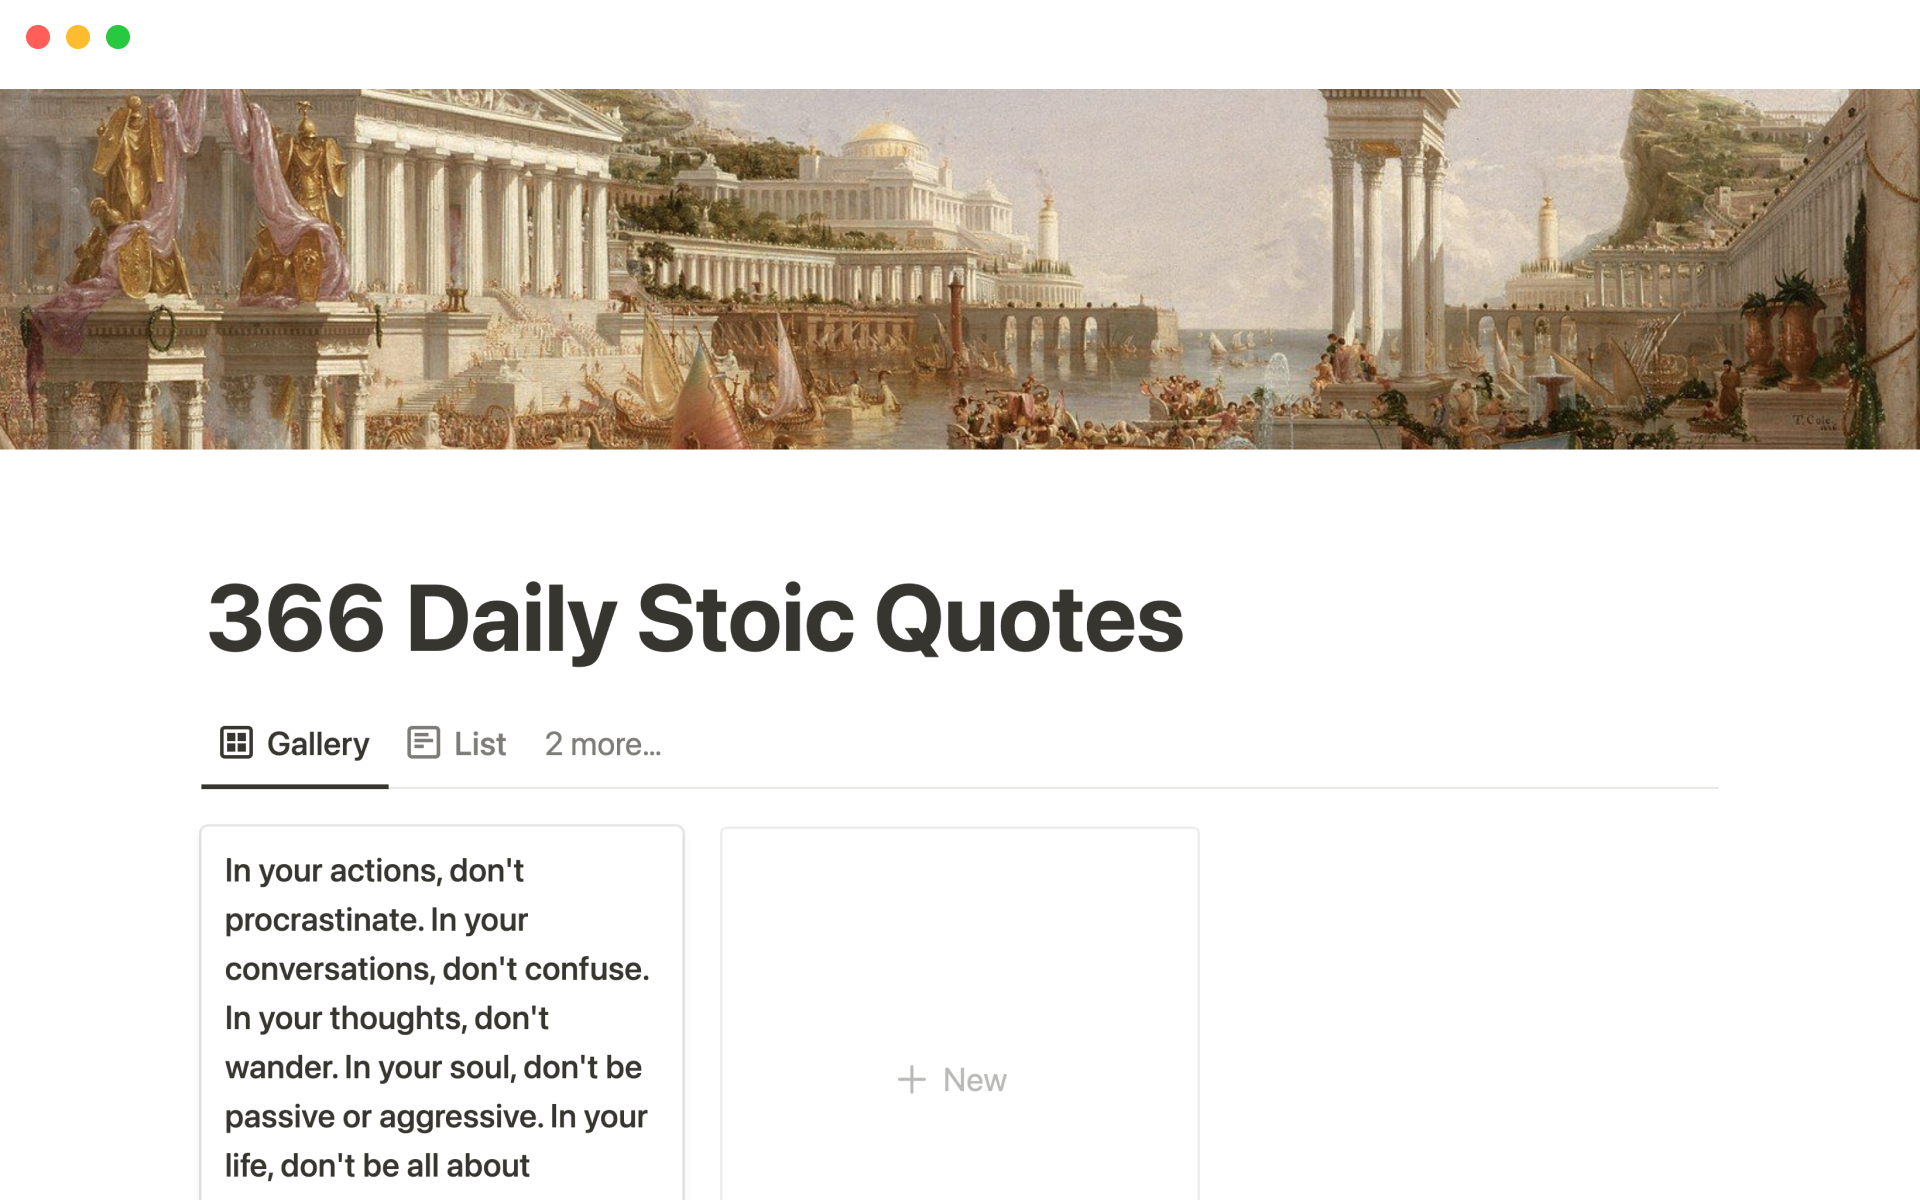 Stoic quotes님의 템플릿 미리보기